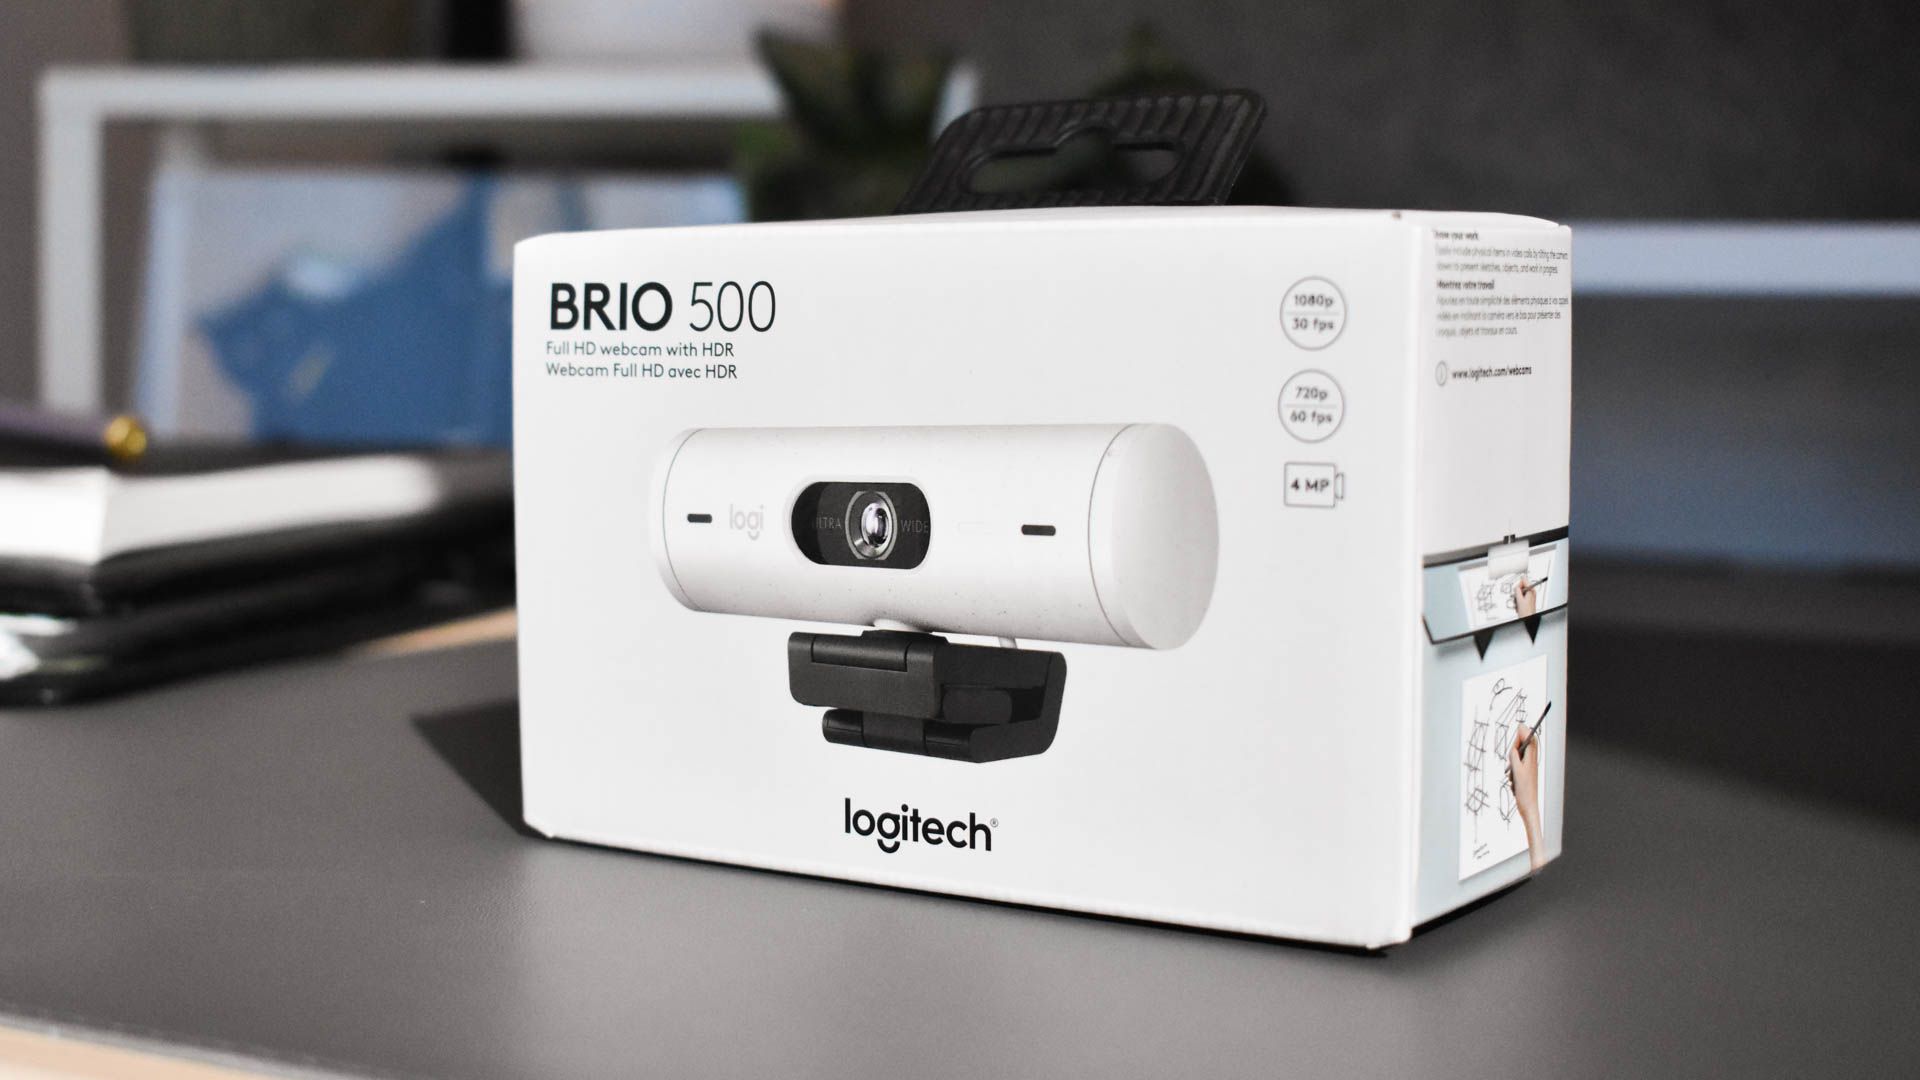 Install Logitech Cameralogitech Brio 4k Webcam - Ultra Hd Video Calling  With Noise-canceling Mic